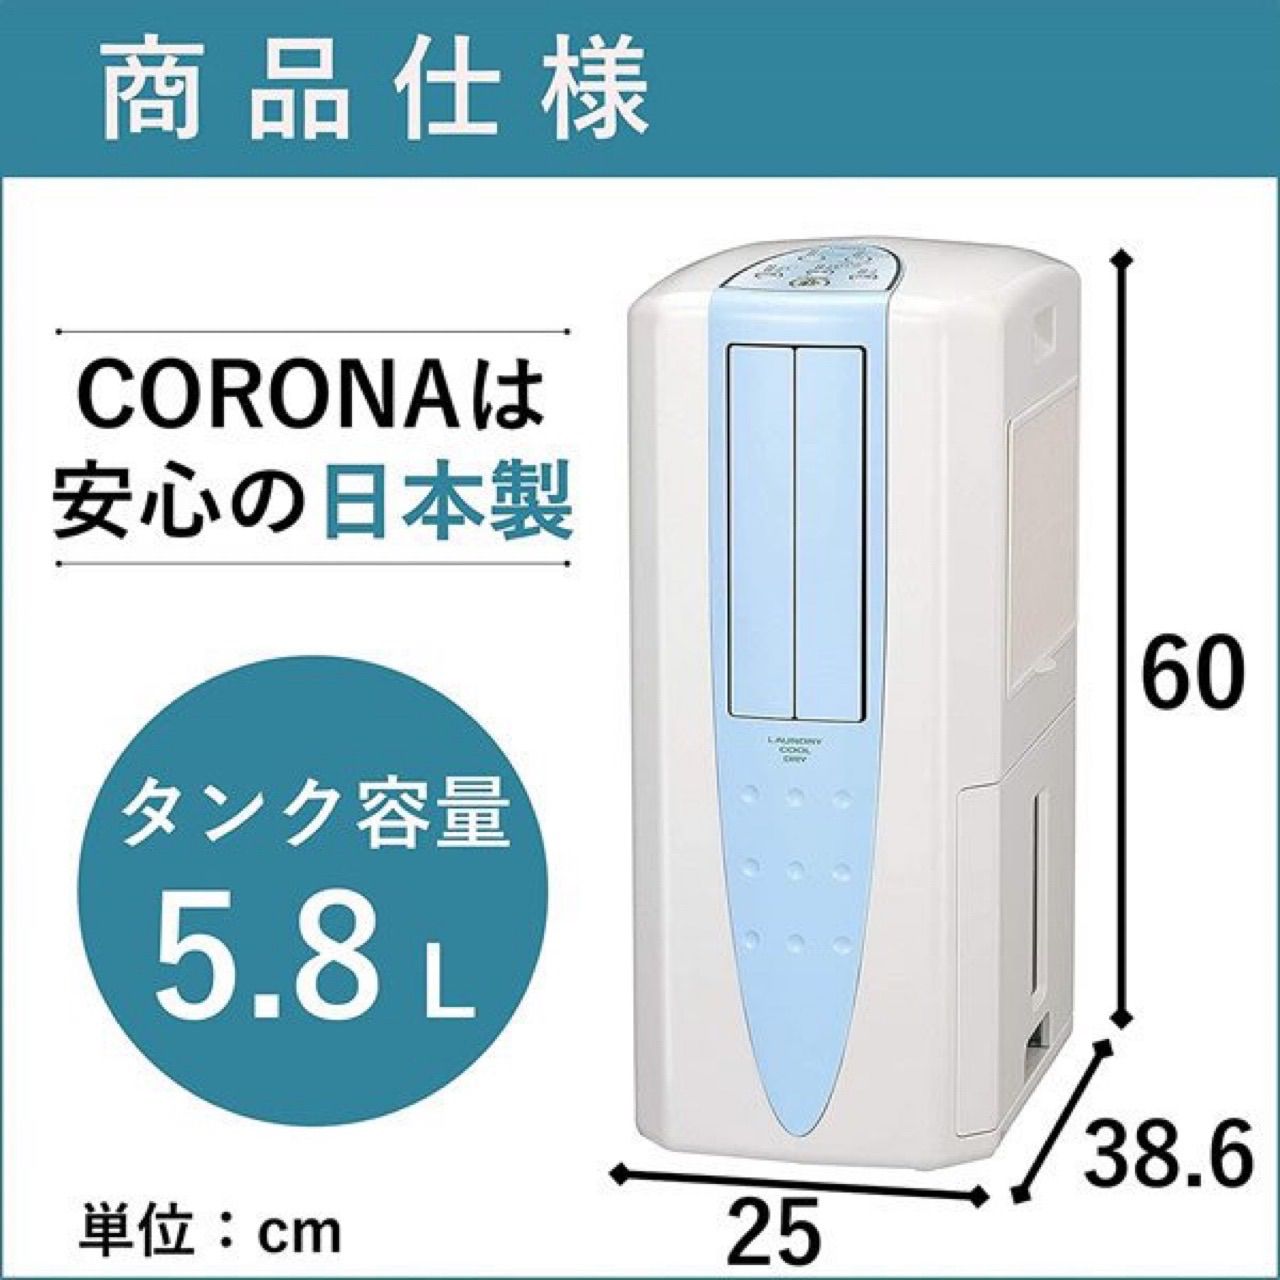 CORONA CDM-1021(AS) BLUE - 空調